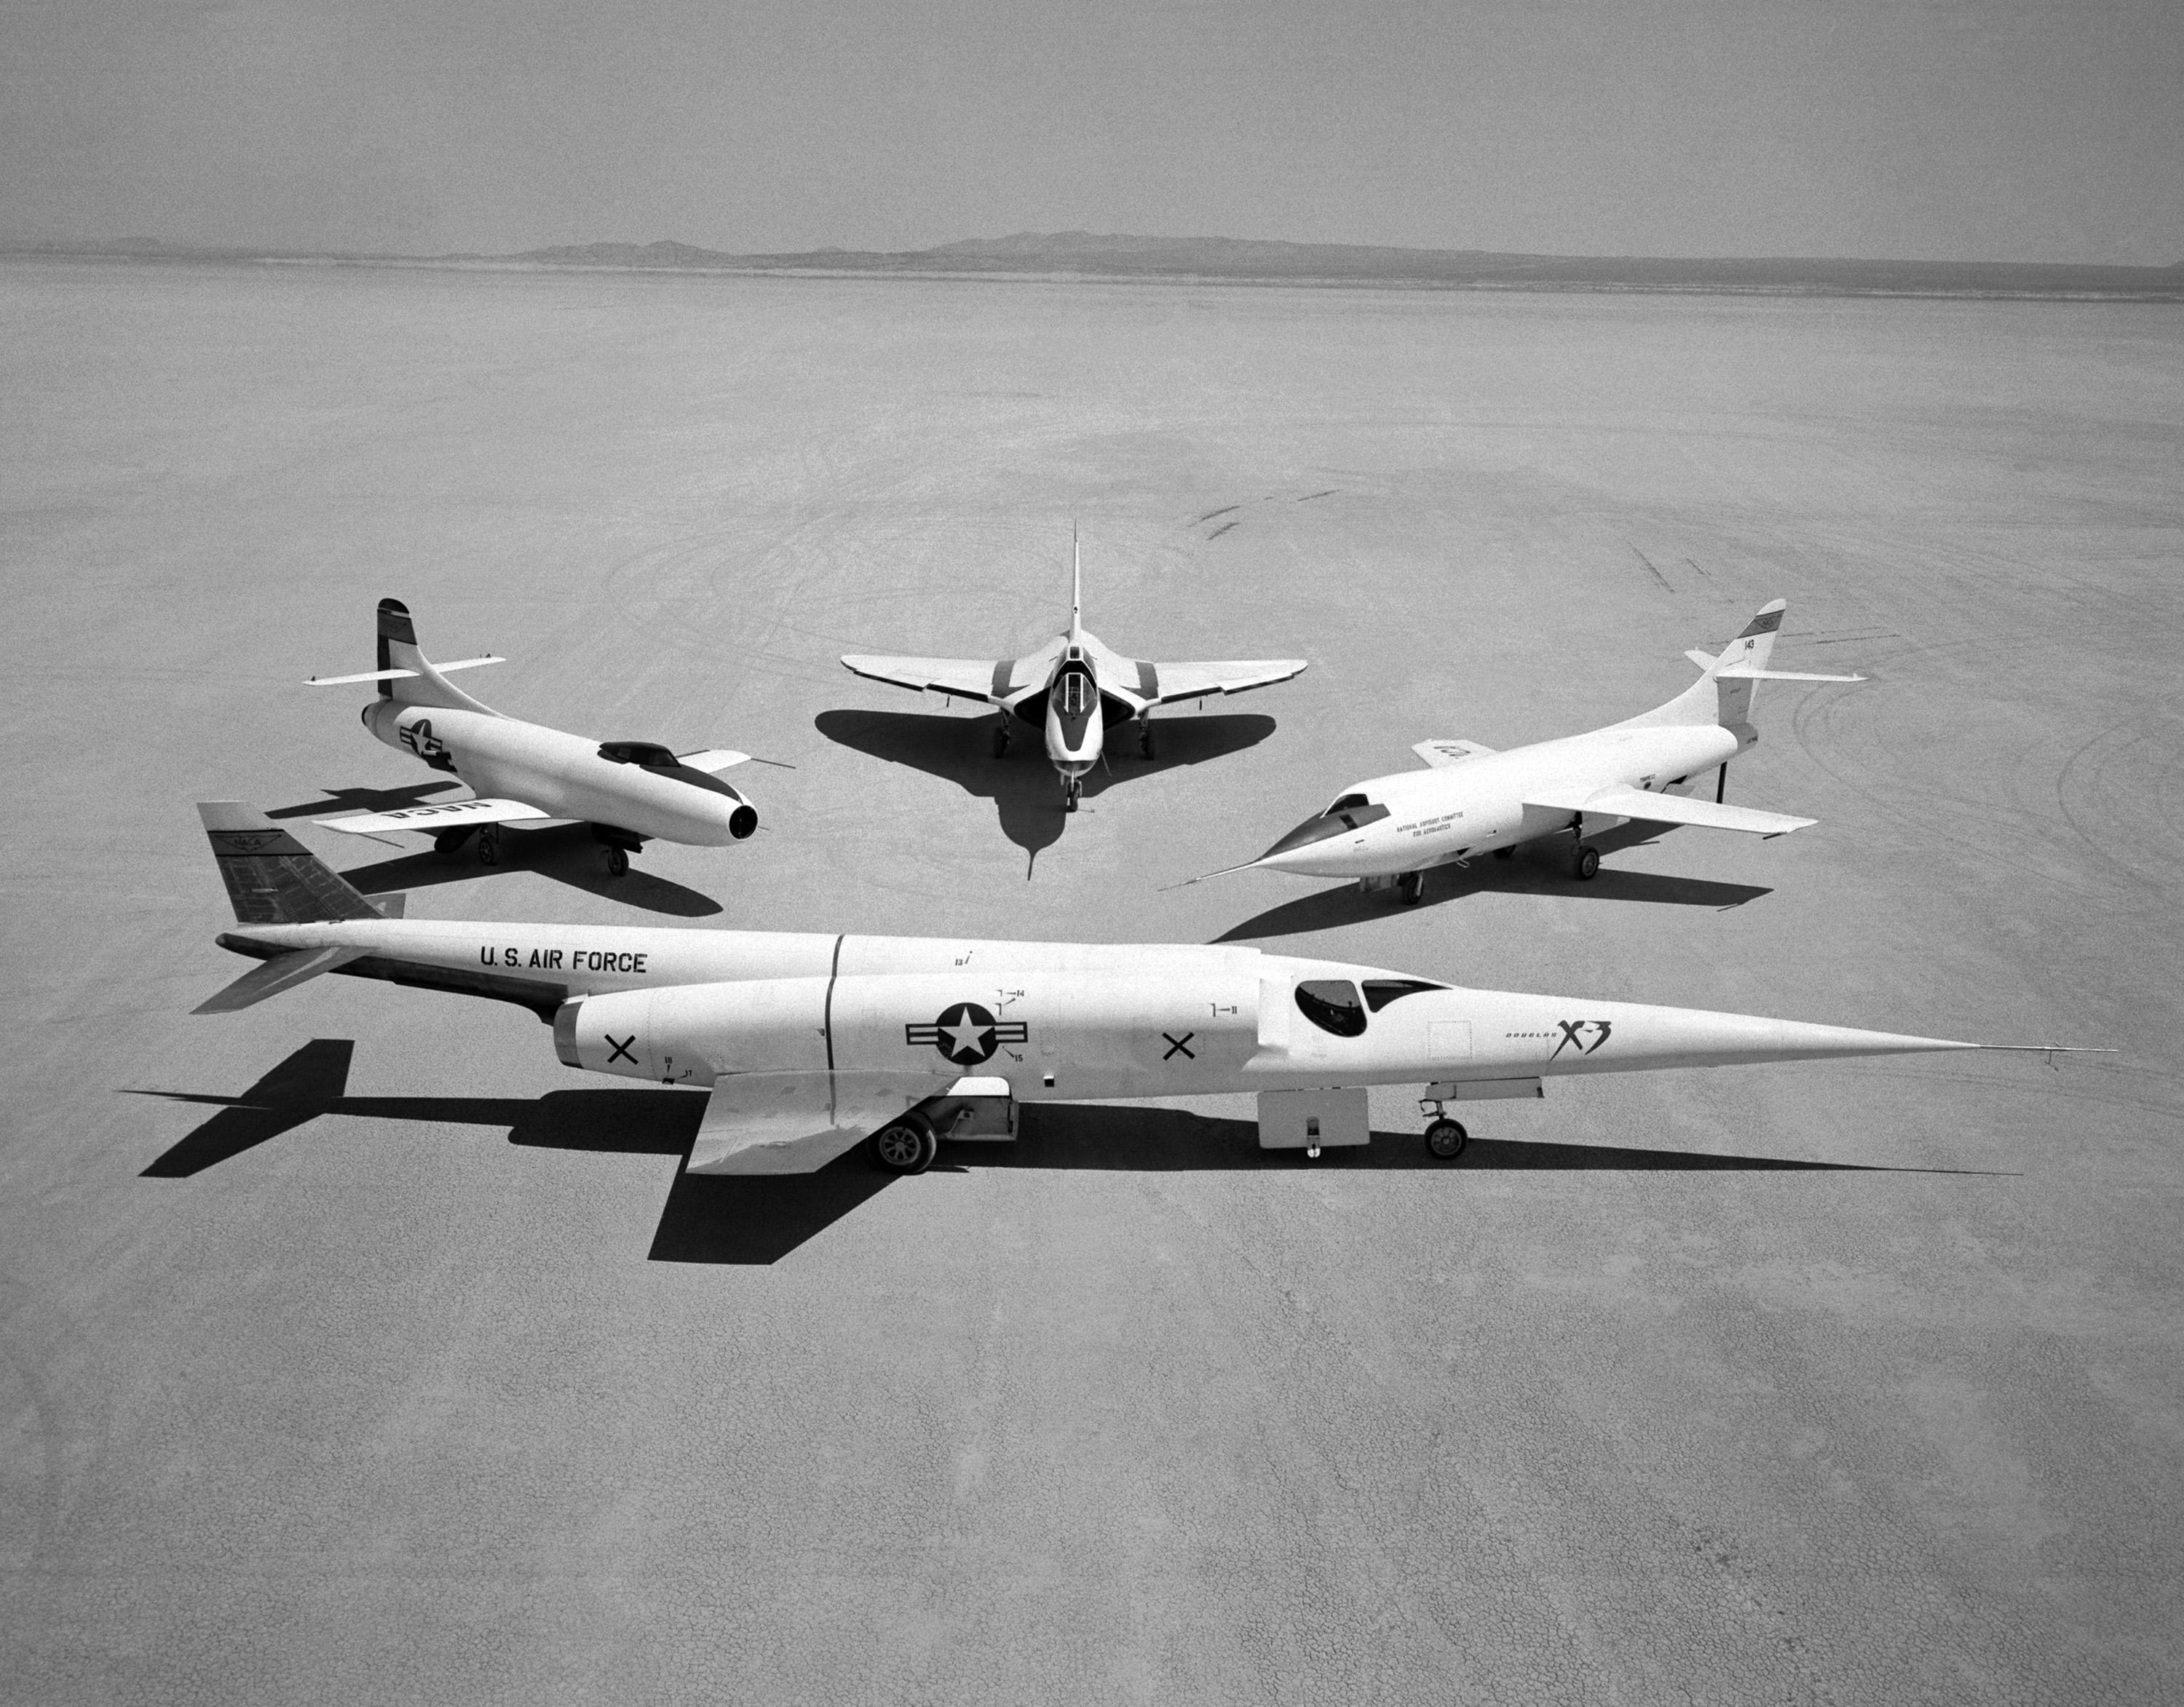 Douglas X-3 Stiletto: The Supersonic Jet That Couldn’t Reach Mach 2